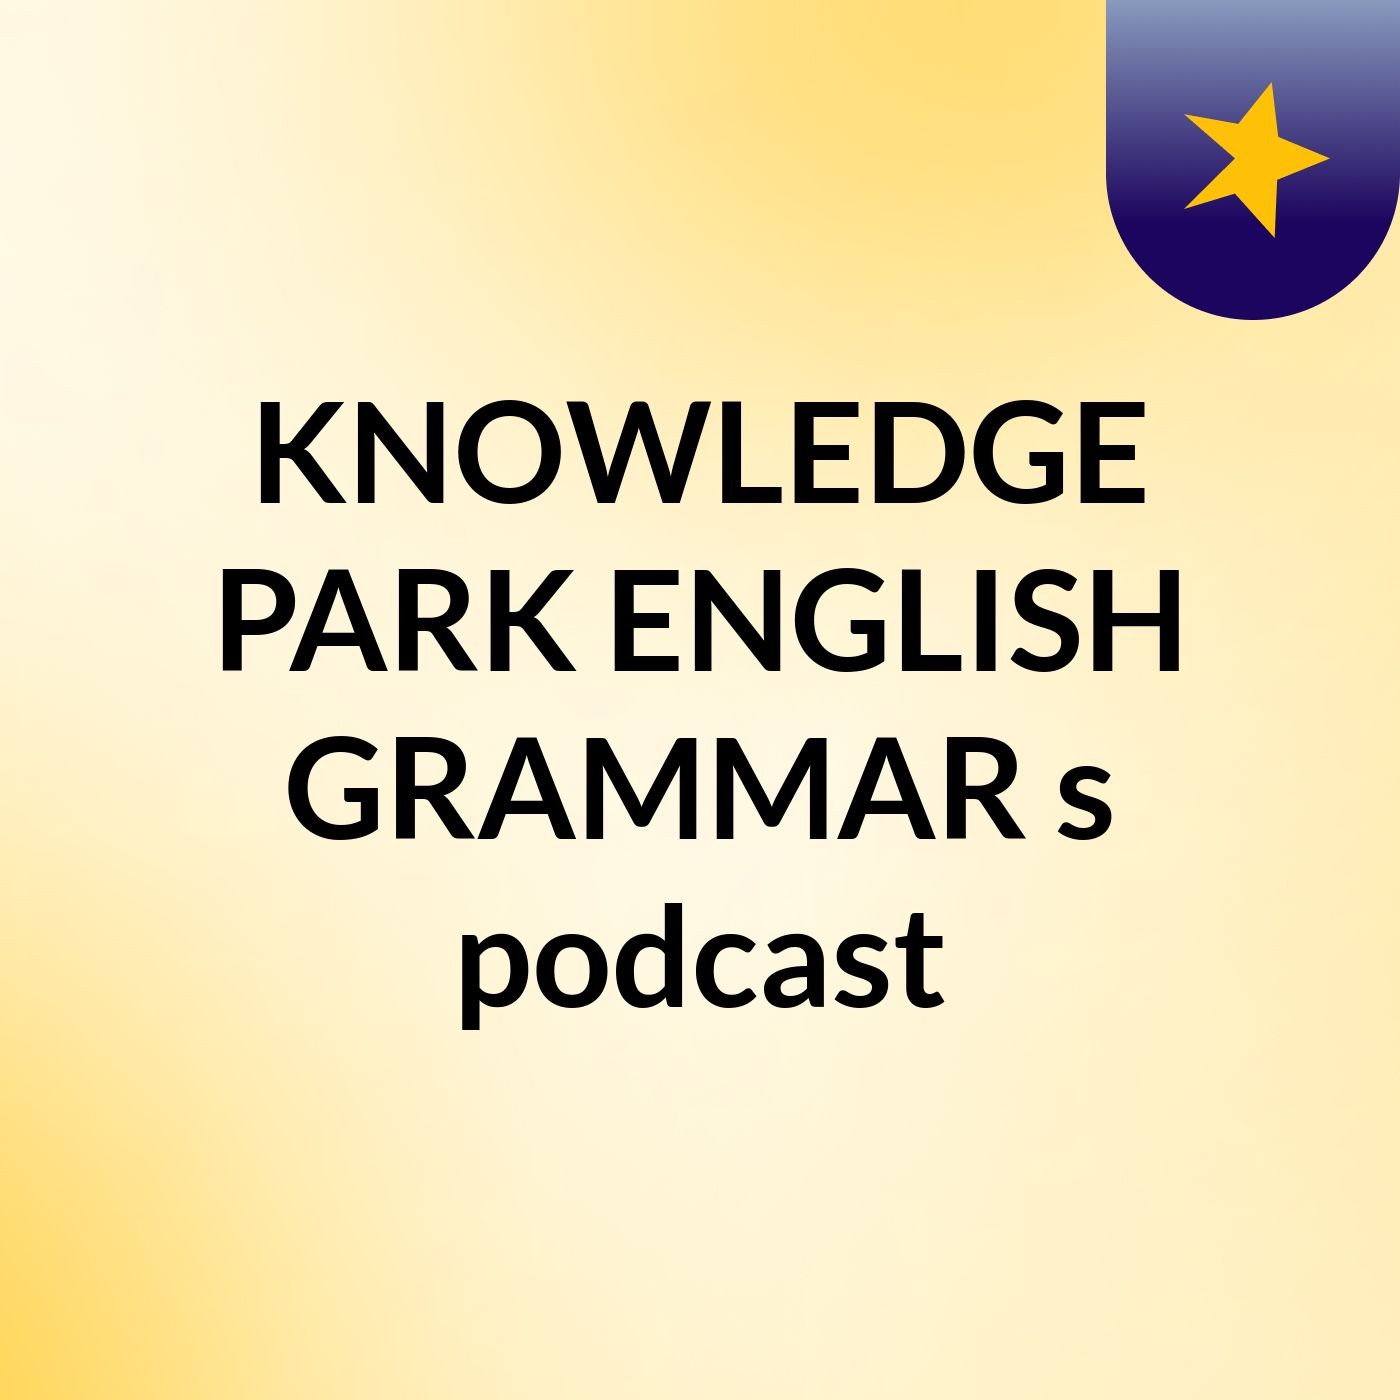 KNOWLEDGE PARK ENGLISH GRAMMAR's podcast